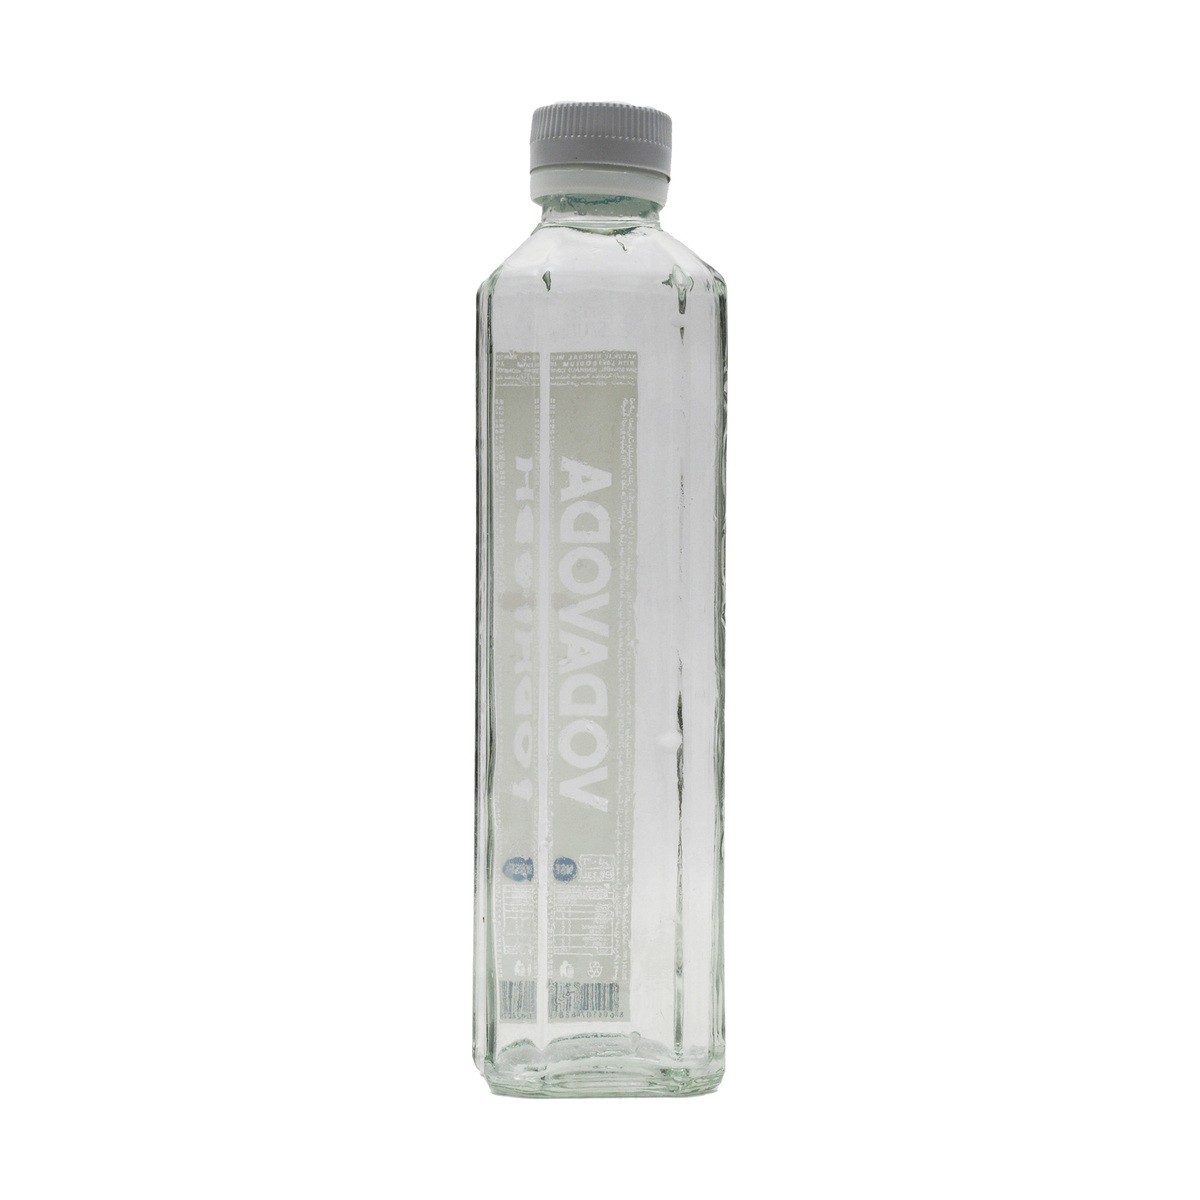 Vodavoda Natural Mineral Water Glass Bottle 330ml